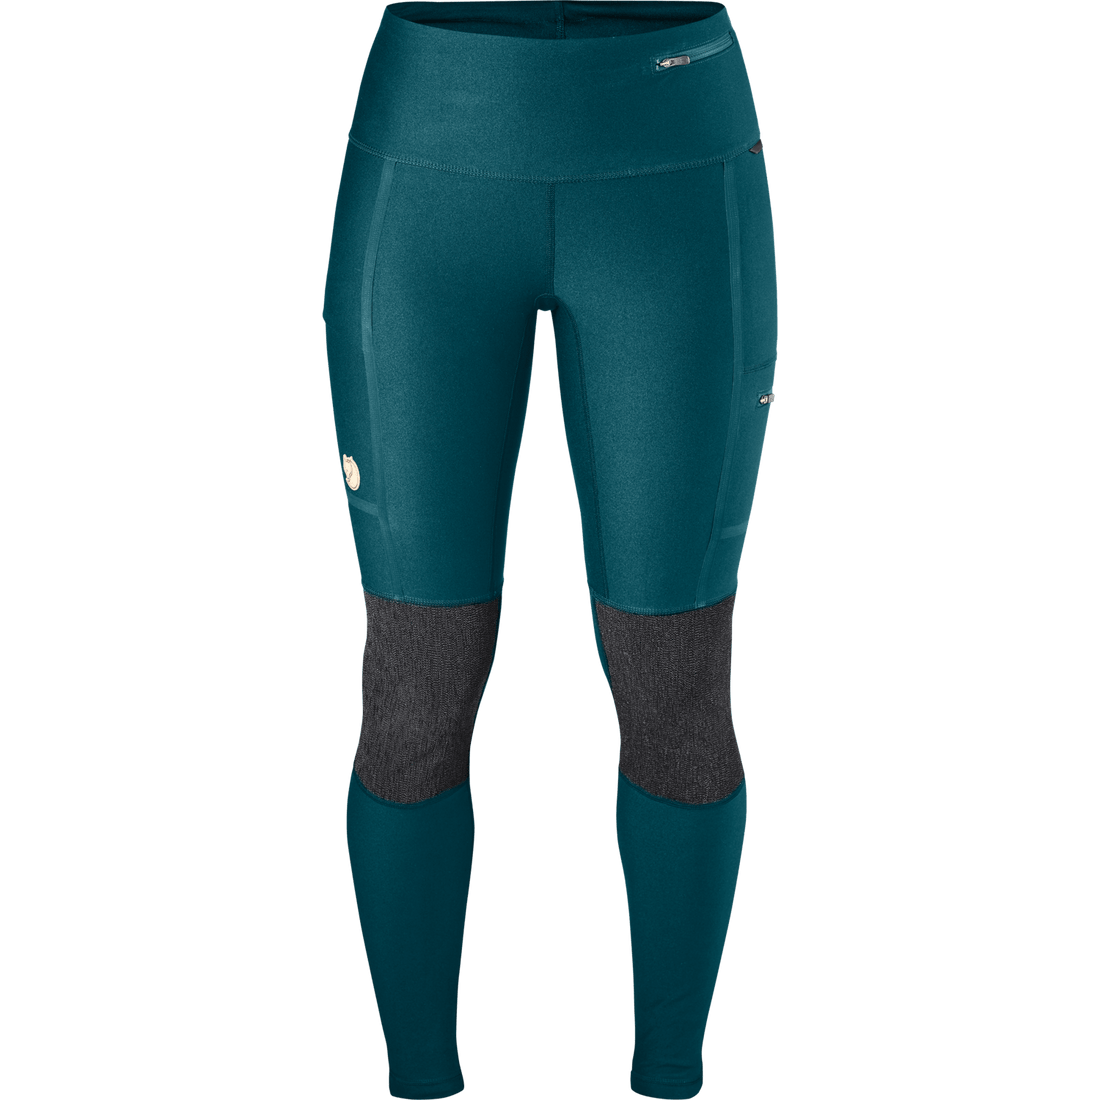 American Apparel Women's Cotton Spandex Jersey Leggings - FOREST - XL 